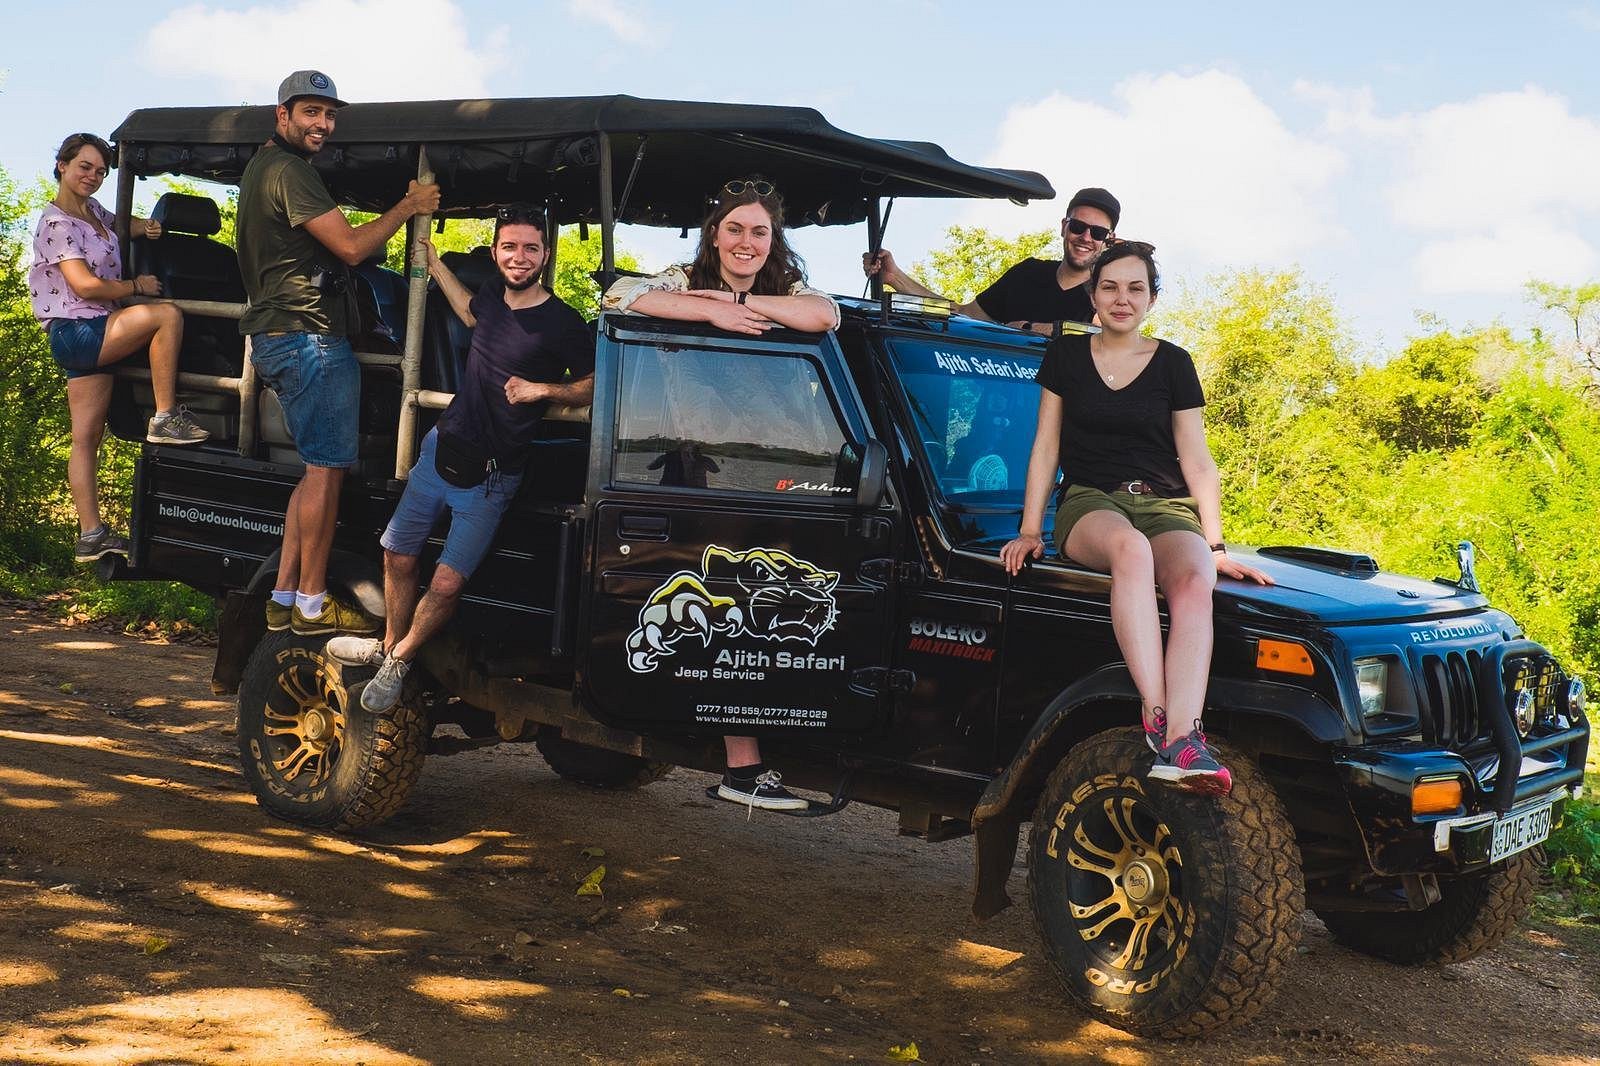 ajith safari jeep tours reviews